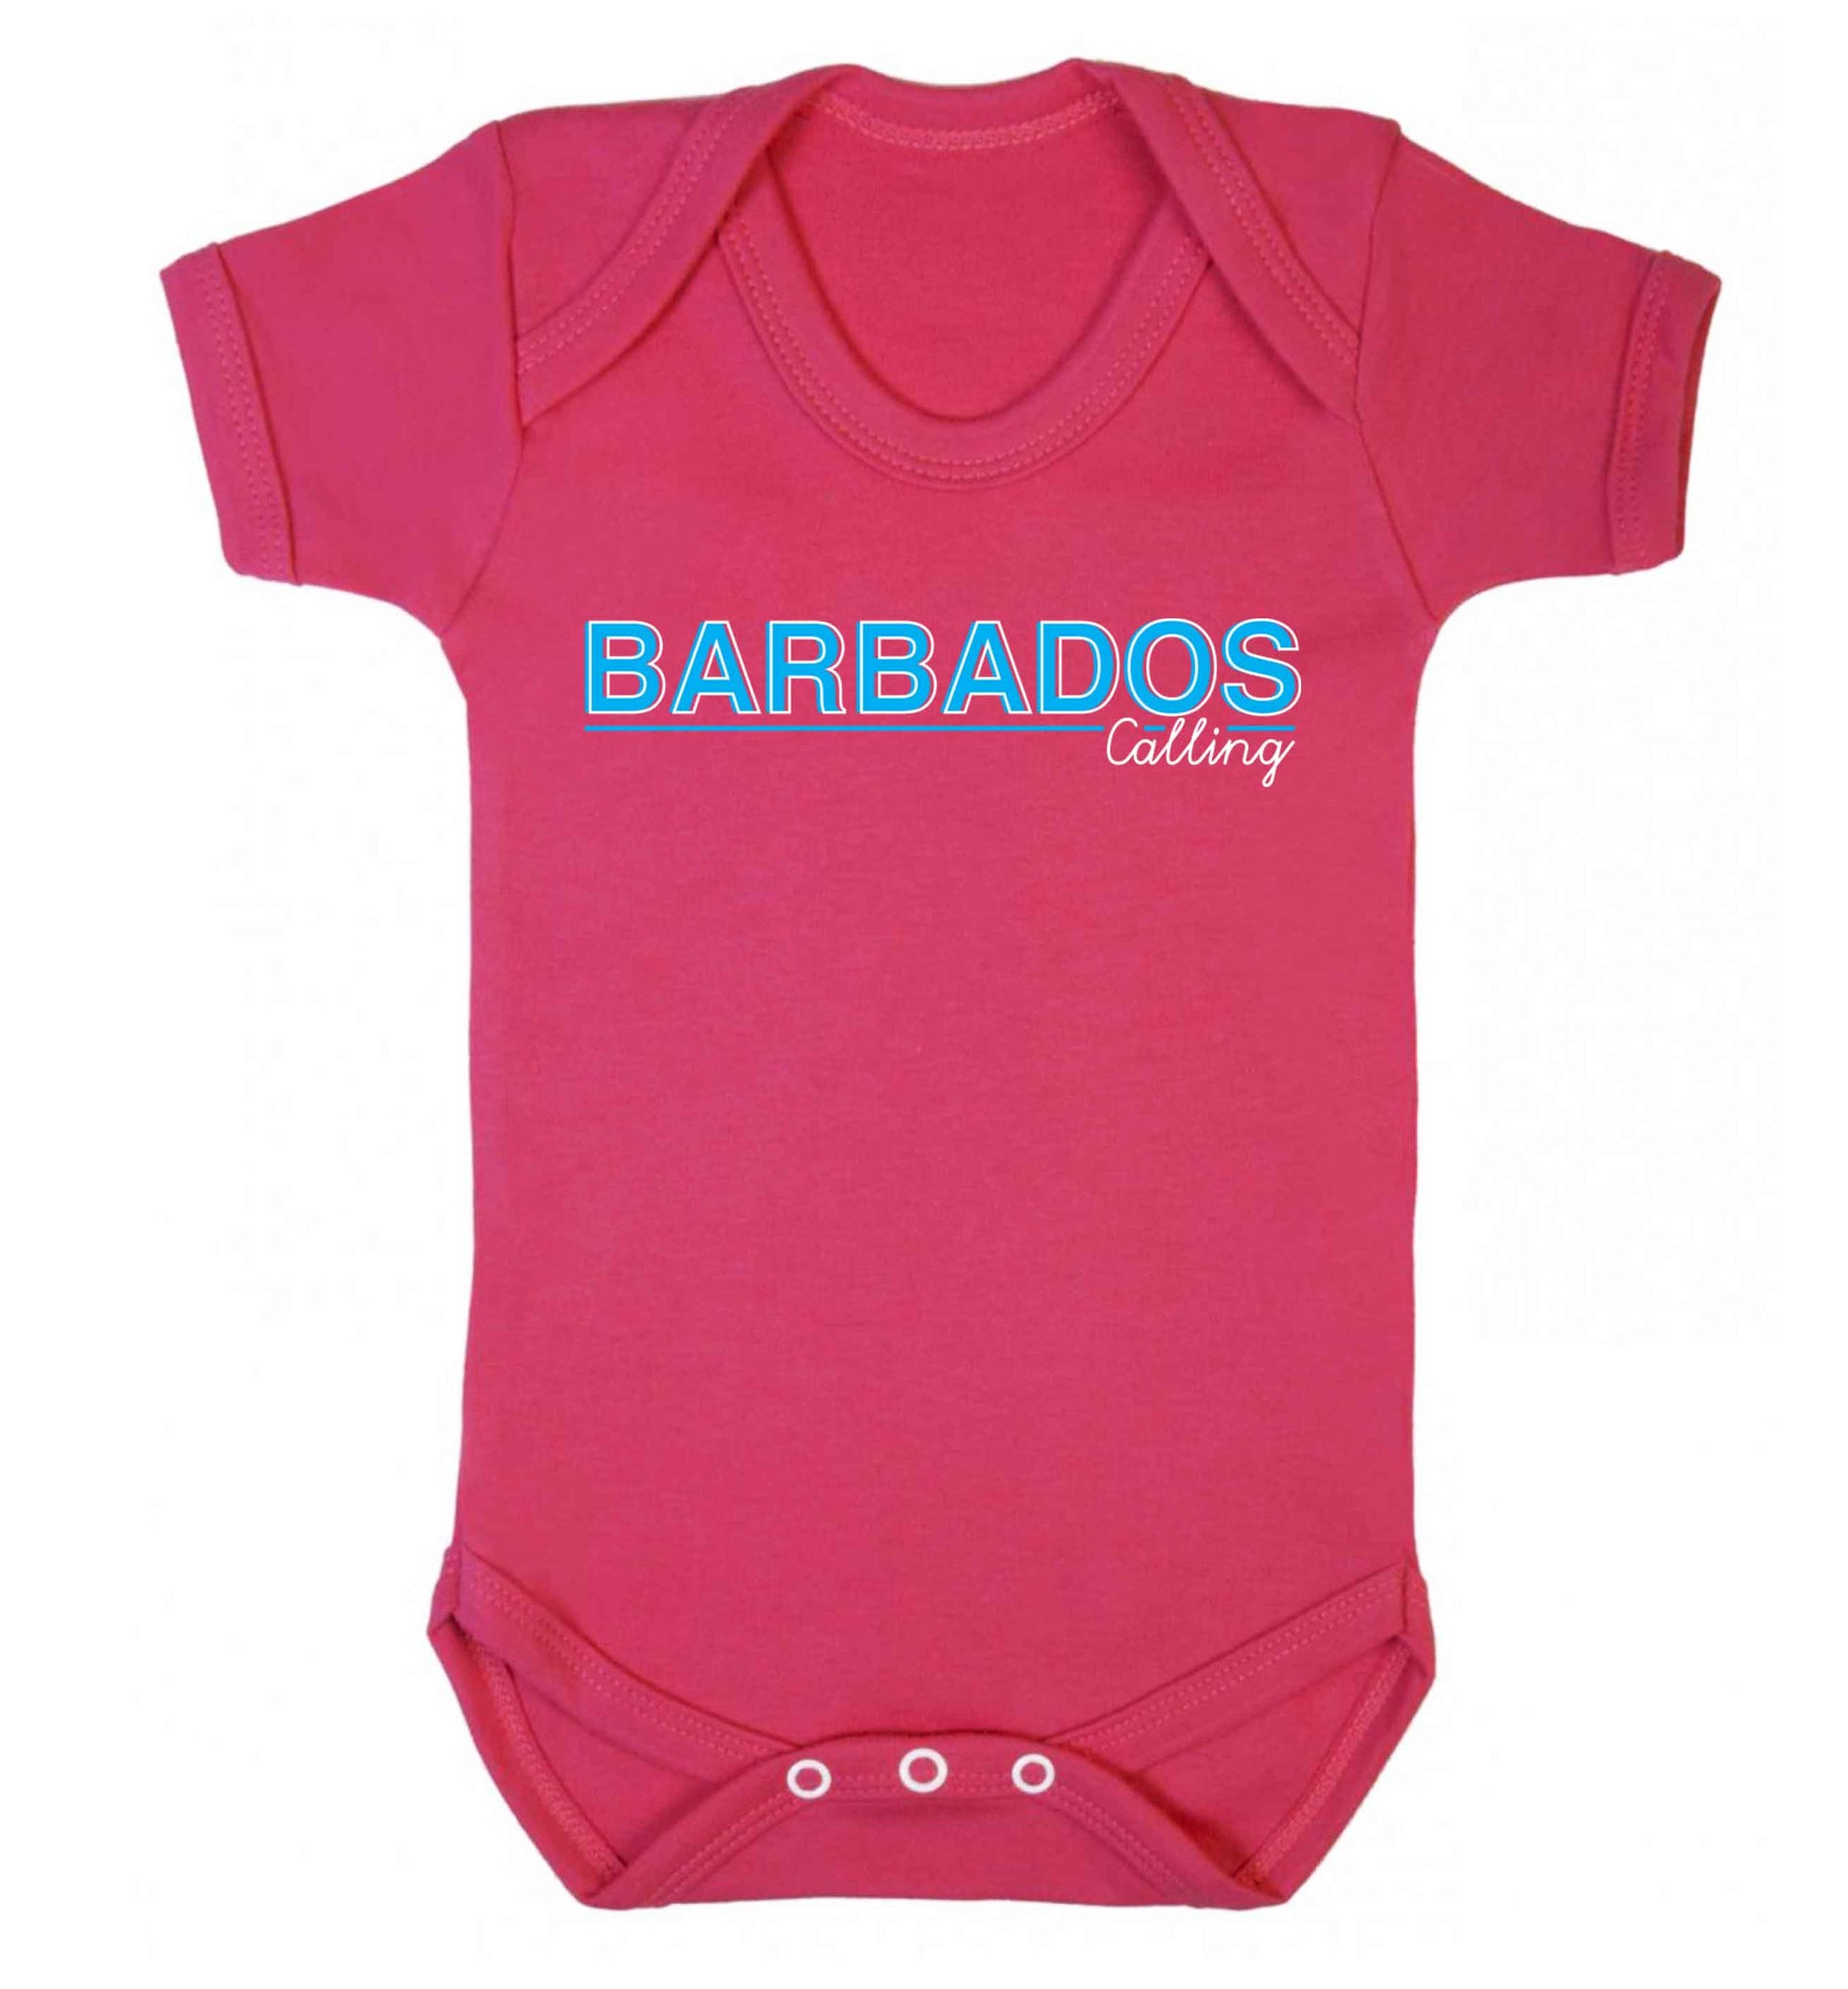 Barbados calling Baby Vest dark pink 18-24 months